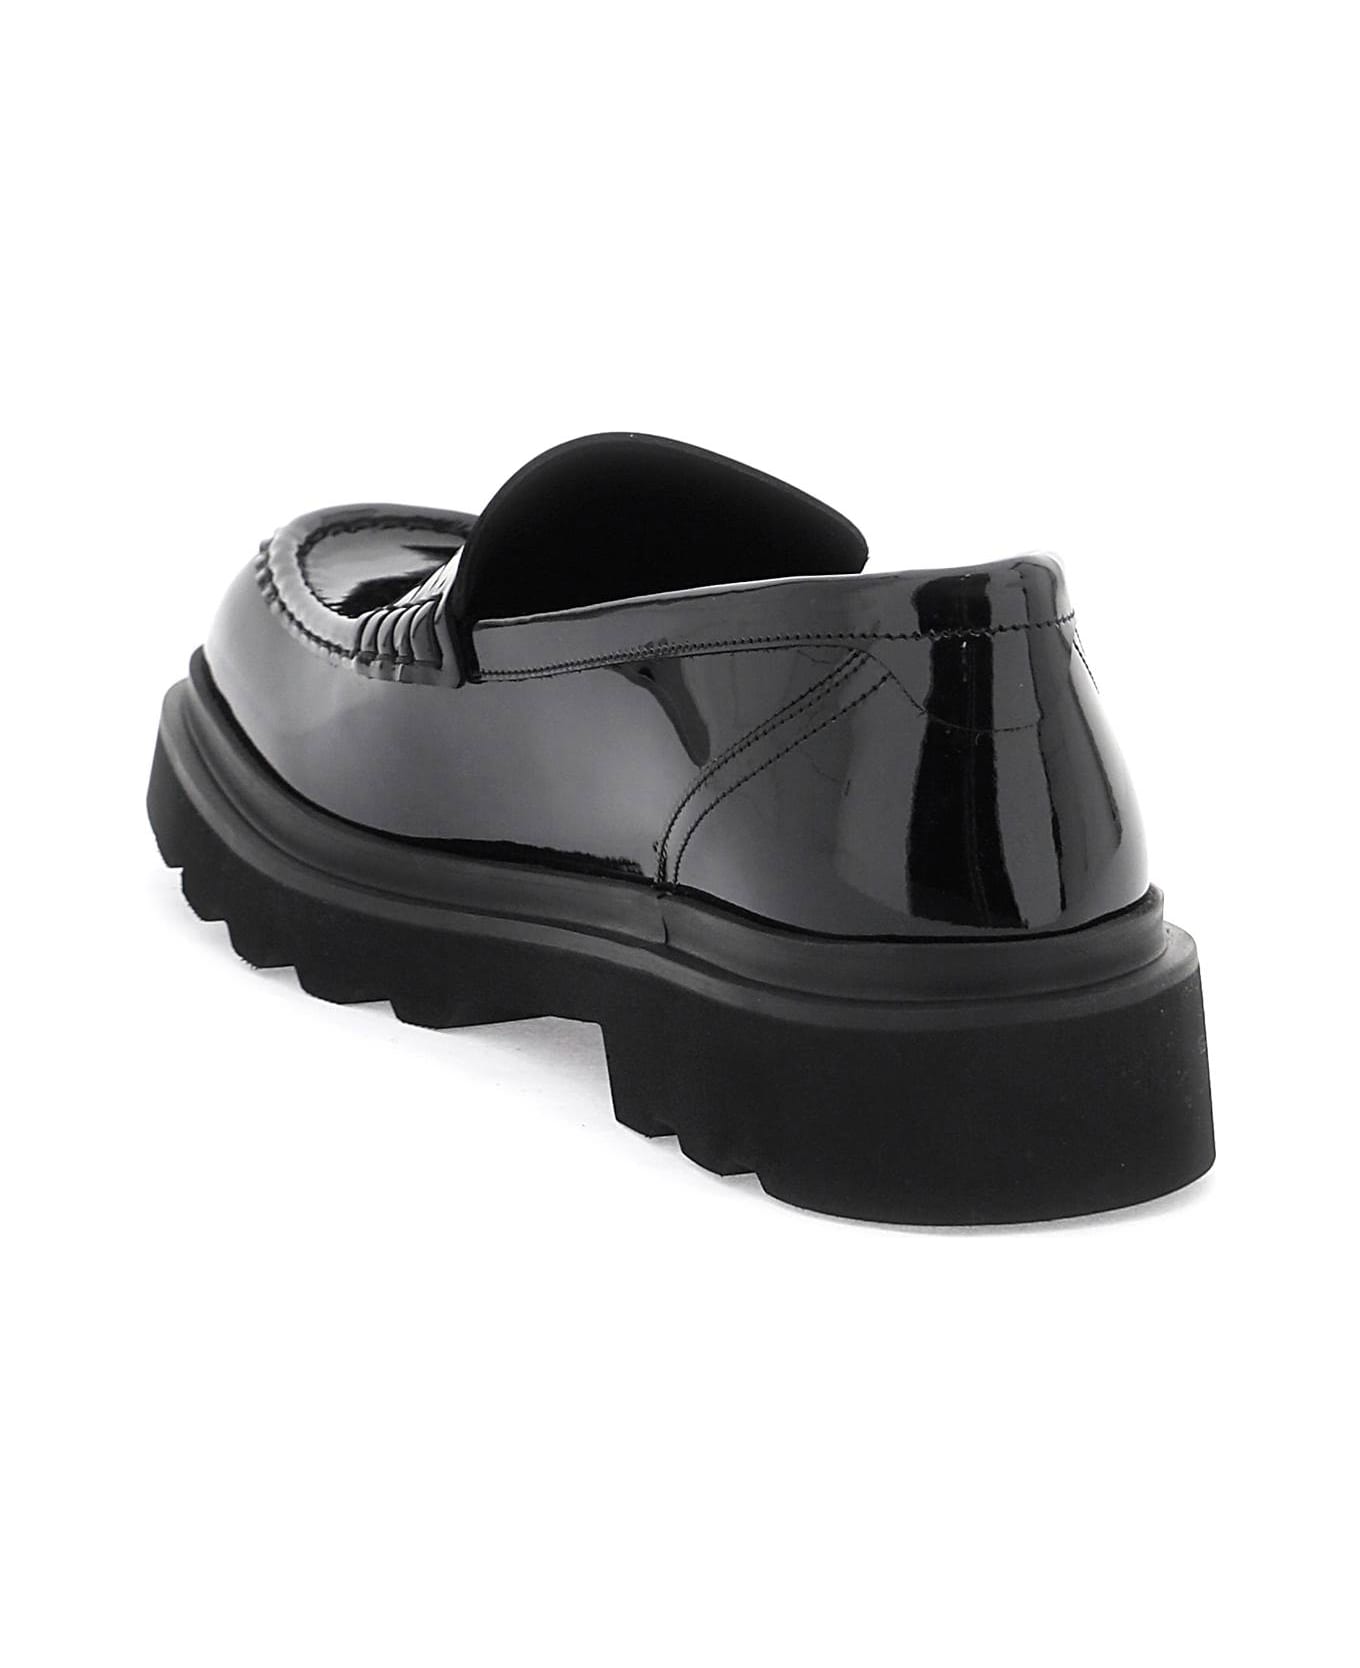 giuseppe zanotti celeste pull on ankle boots item Patent Leather Mocassins - NERO (Black)